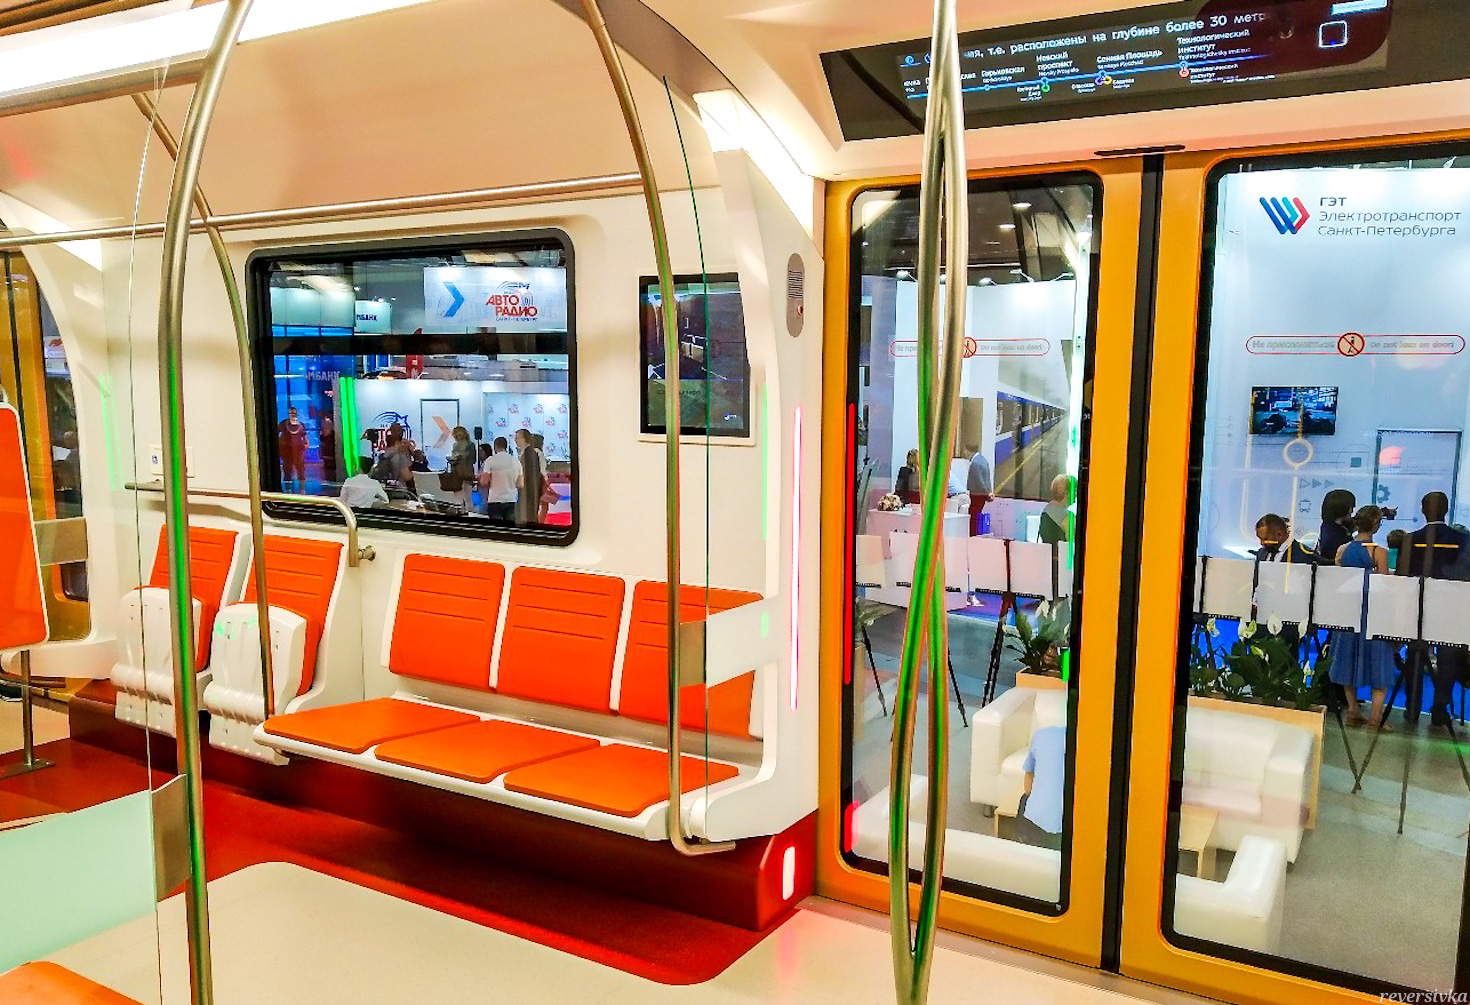 Saint-Pétersbourg — Metro — Other; Saint-Pétersbourg — SmartTRANSPORT 2019